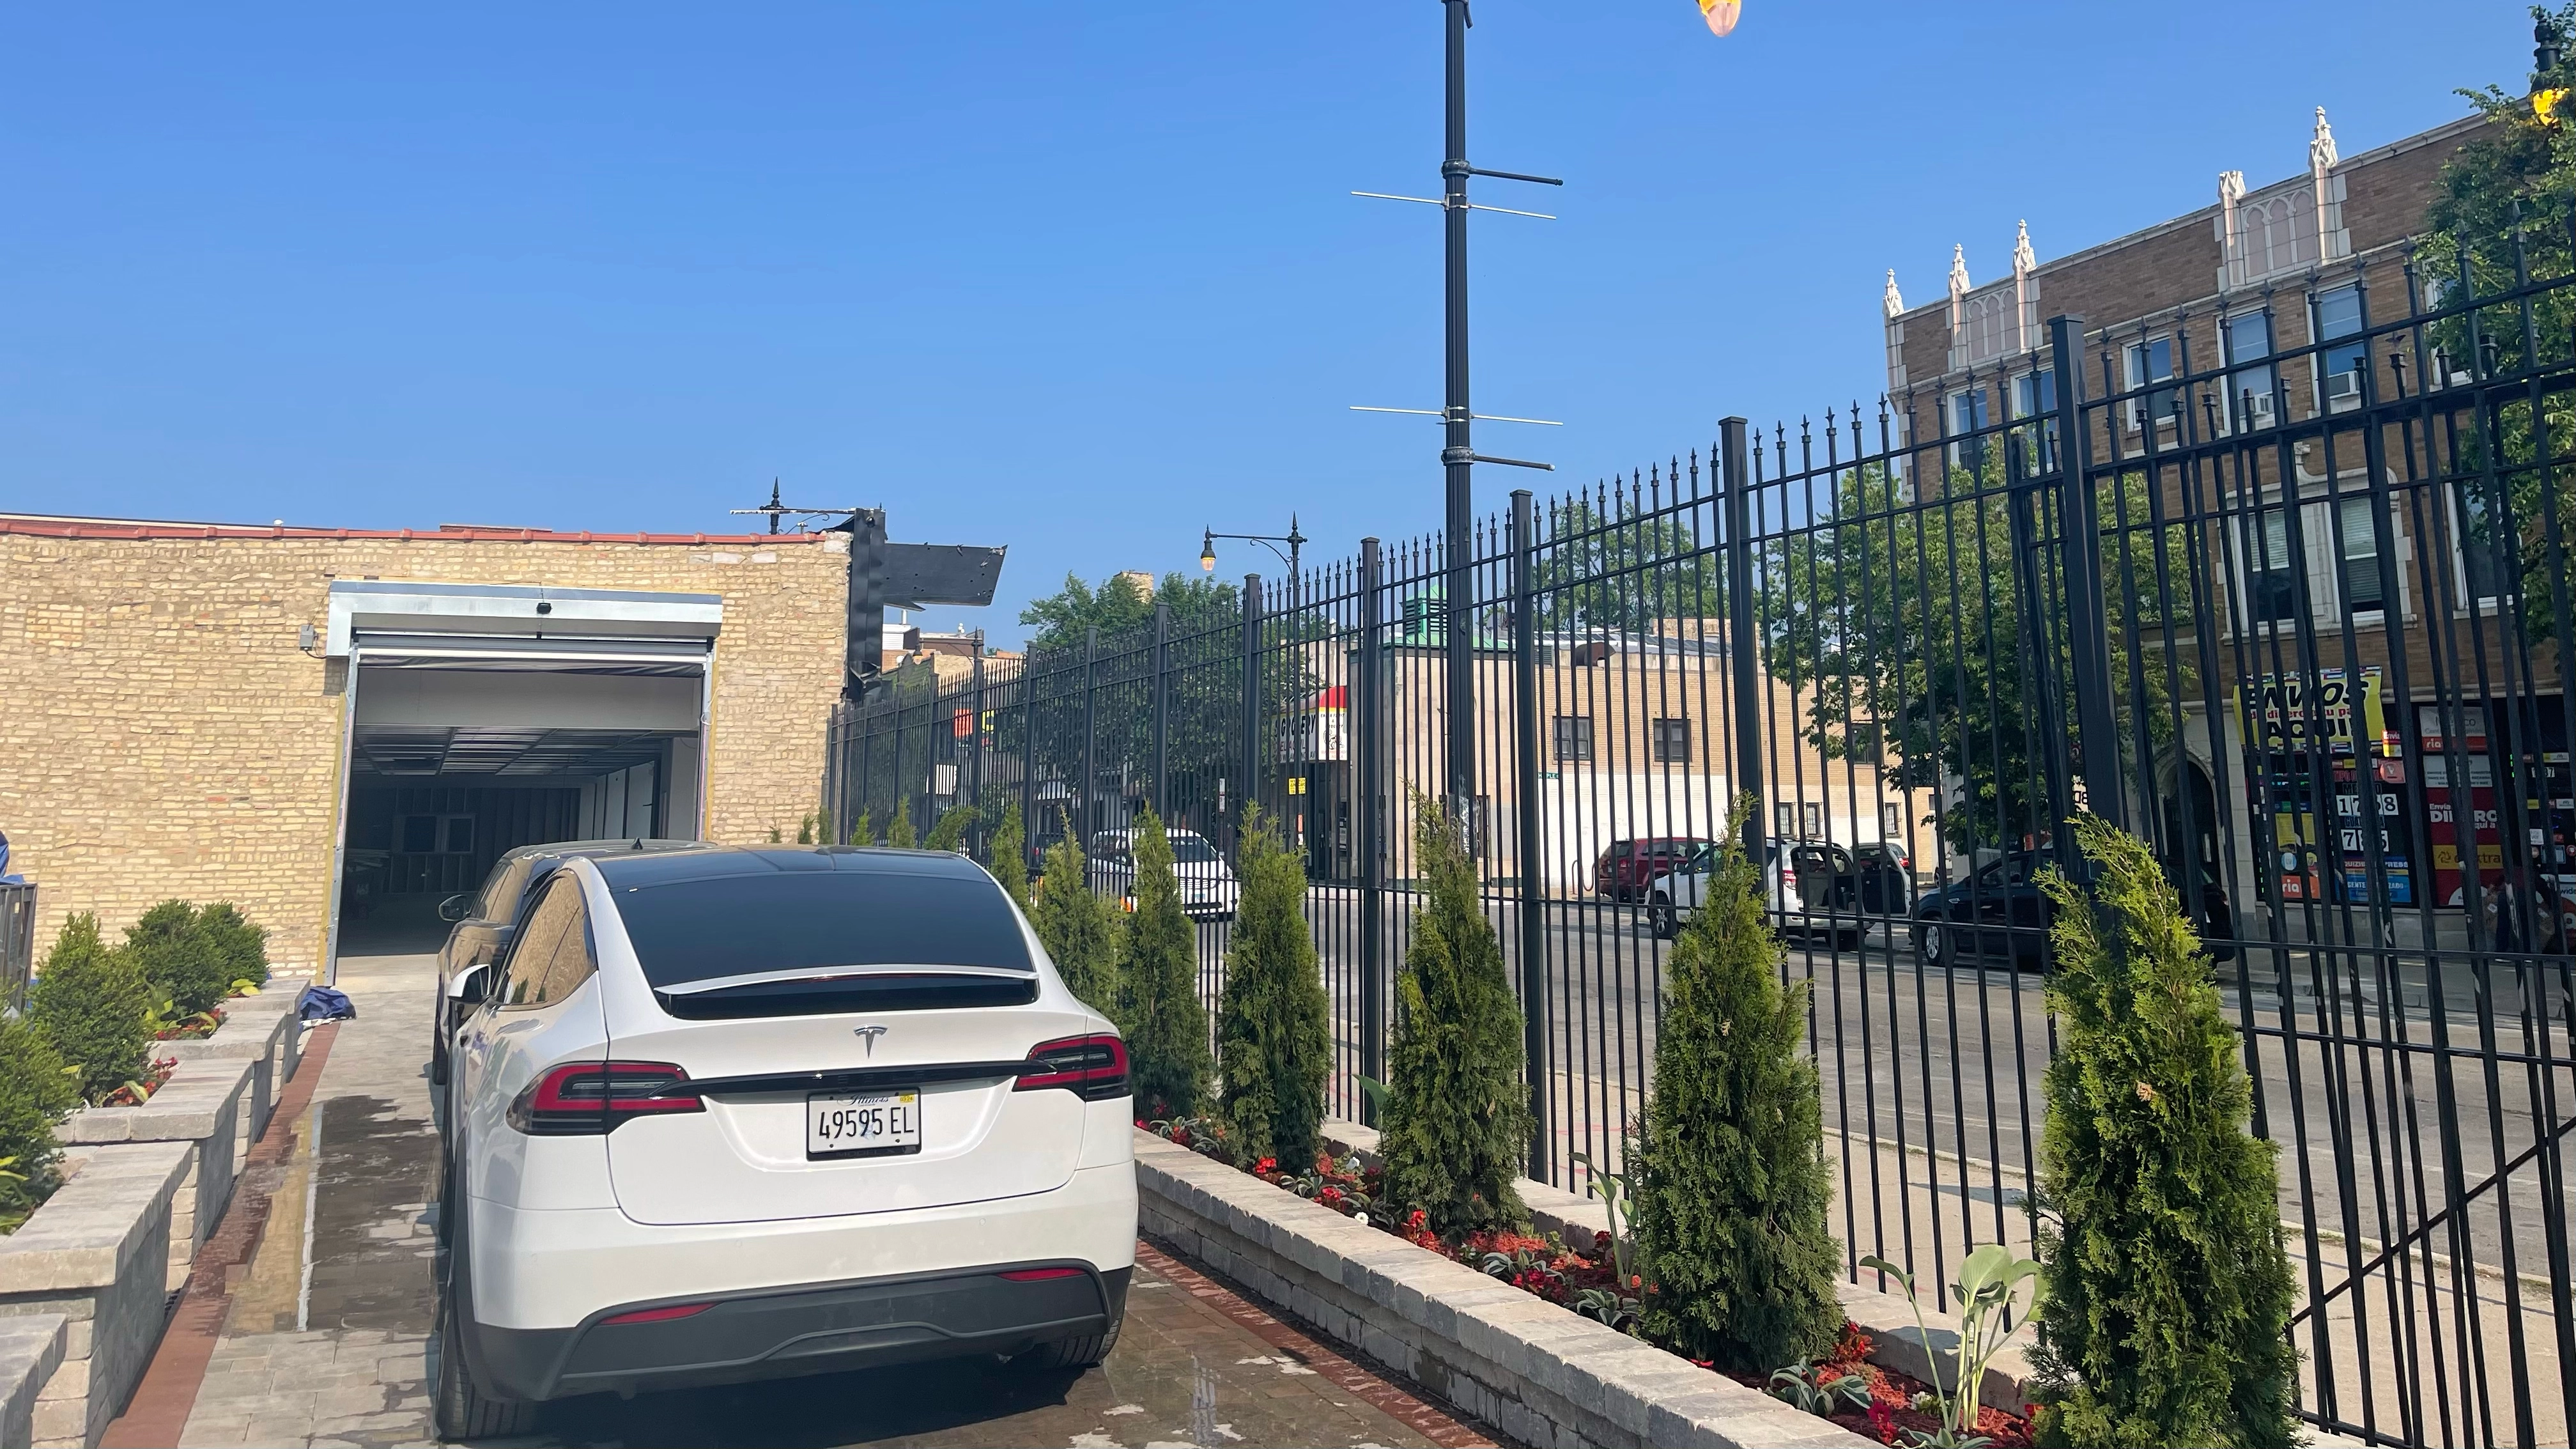 Brick driveway with a Tesla on it